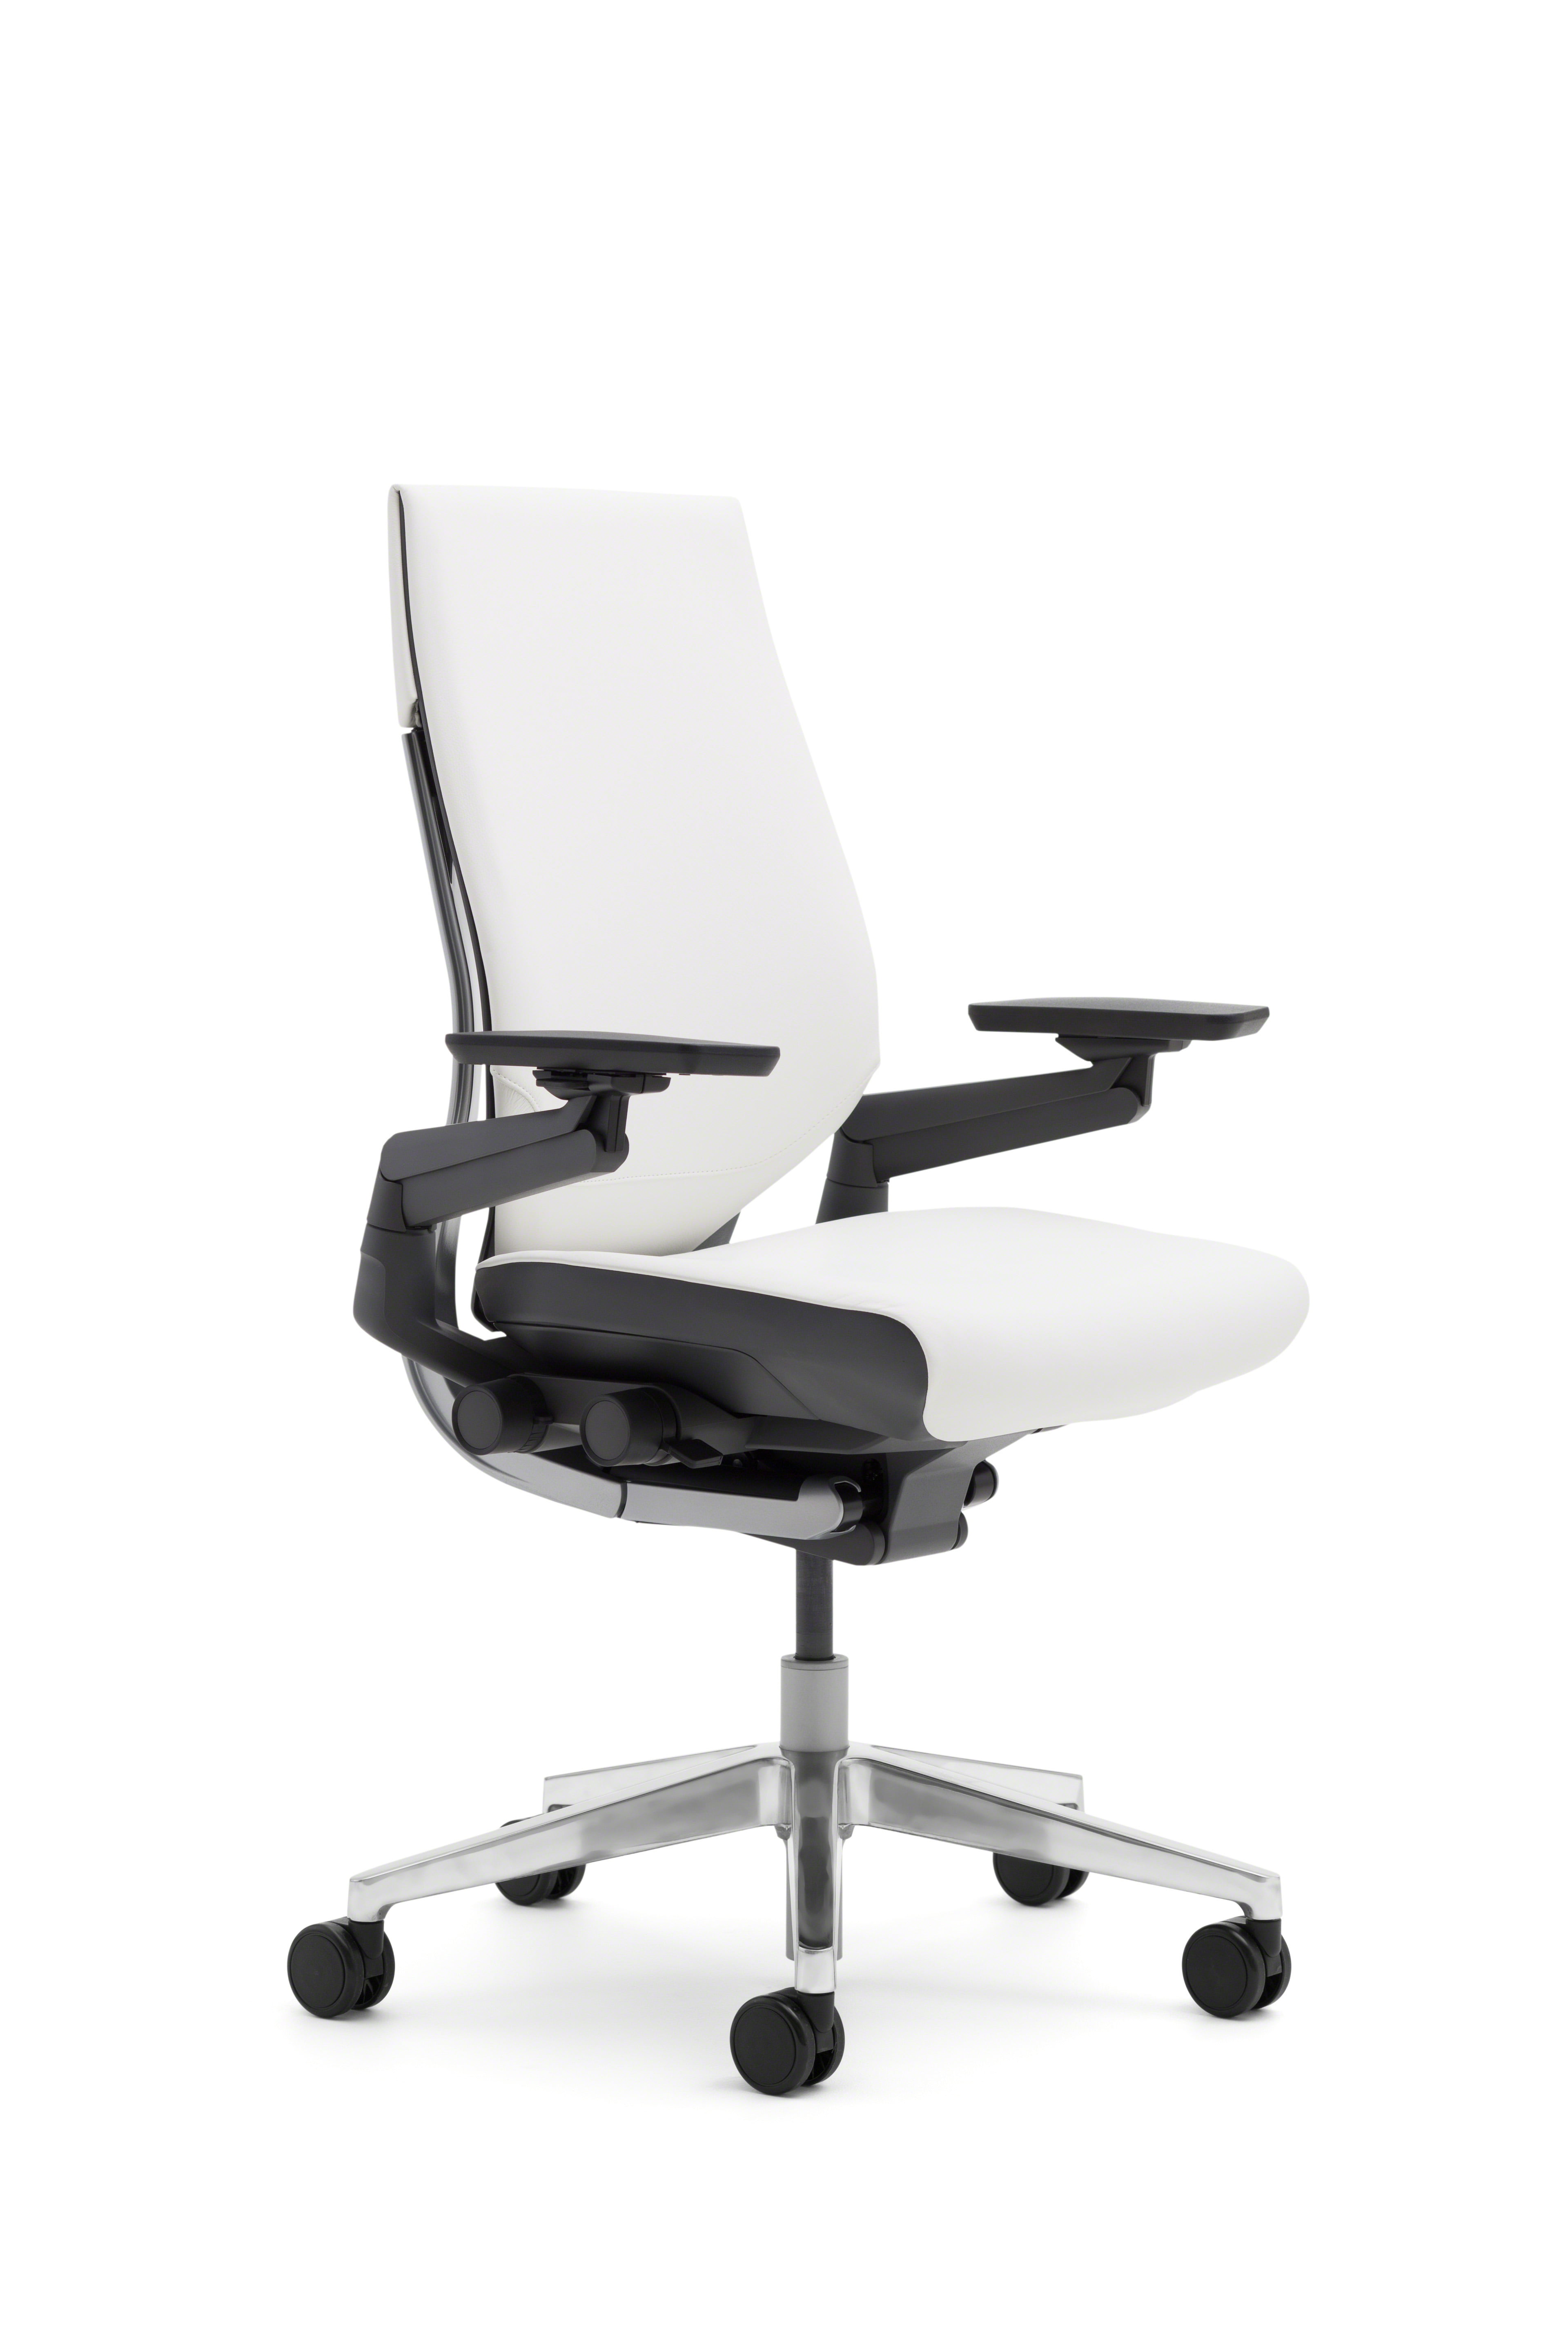 Steelcase Office Chair - Back, Light on Dark Frame - Walmart.com